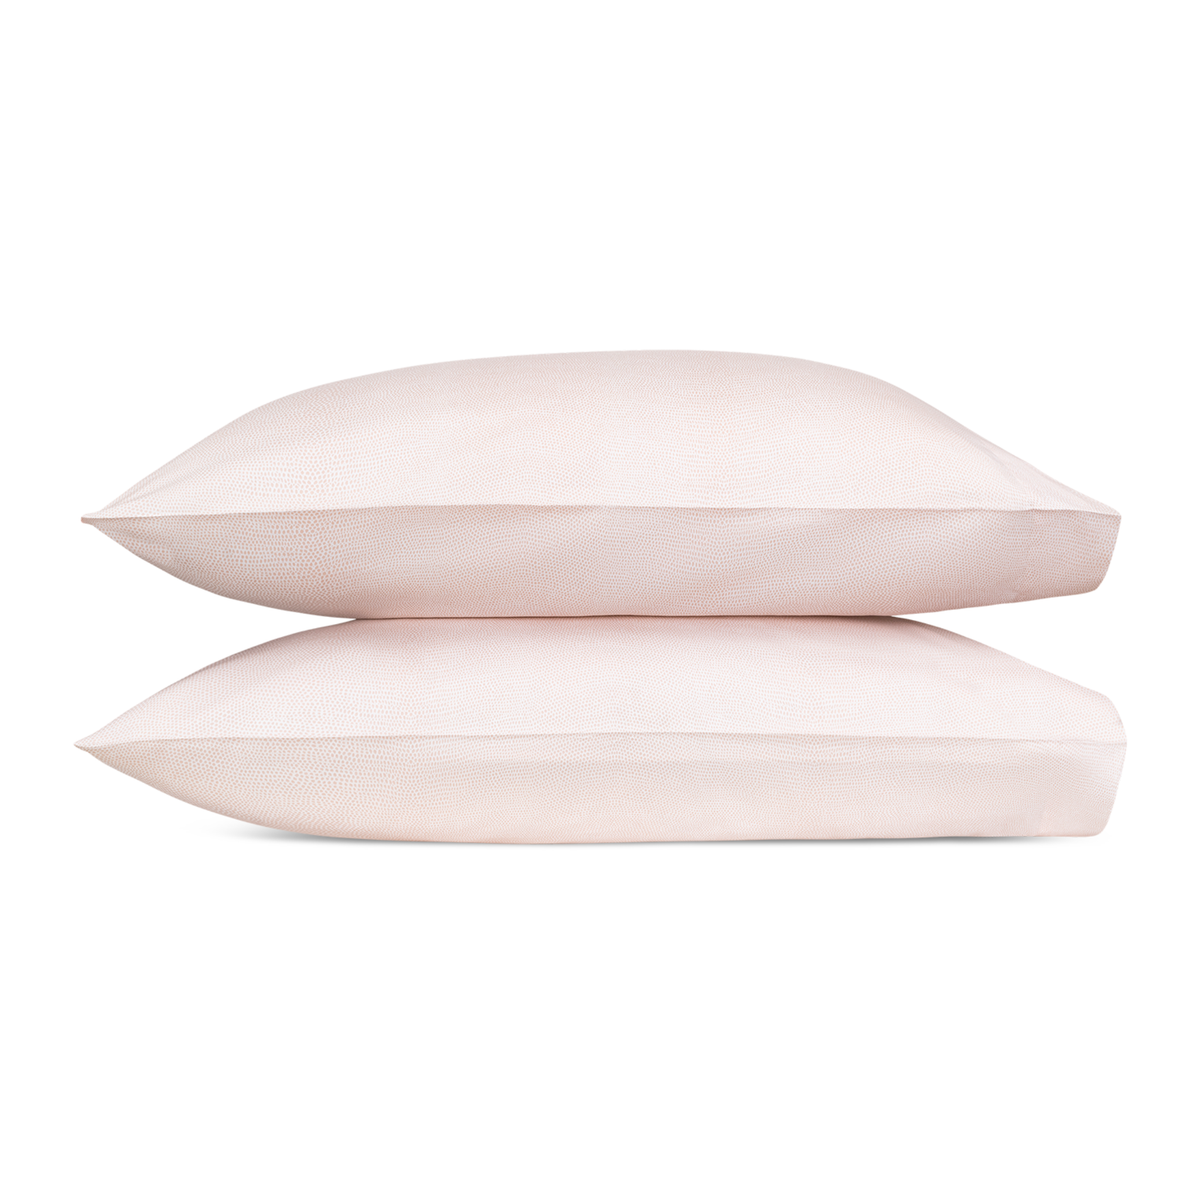 Pair of Pillowcases of Pink Matouk Jasper Bedding